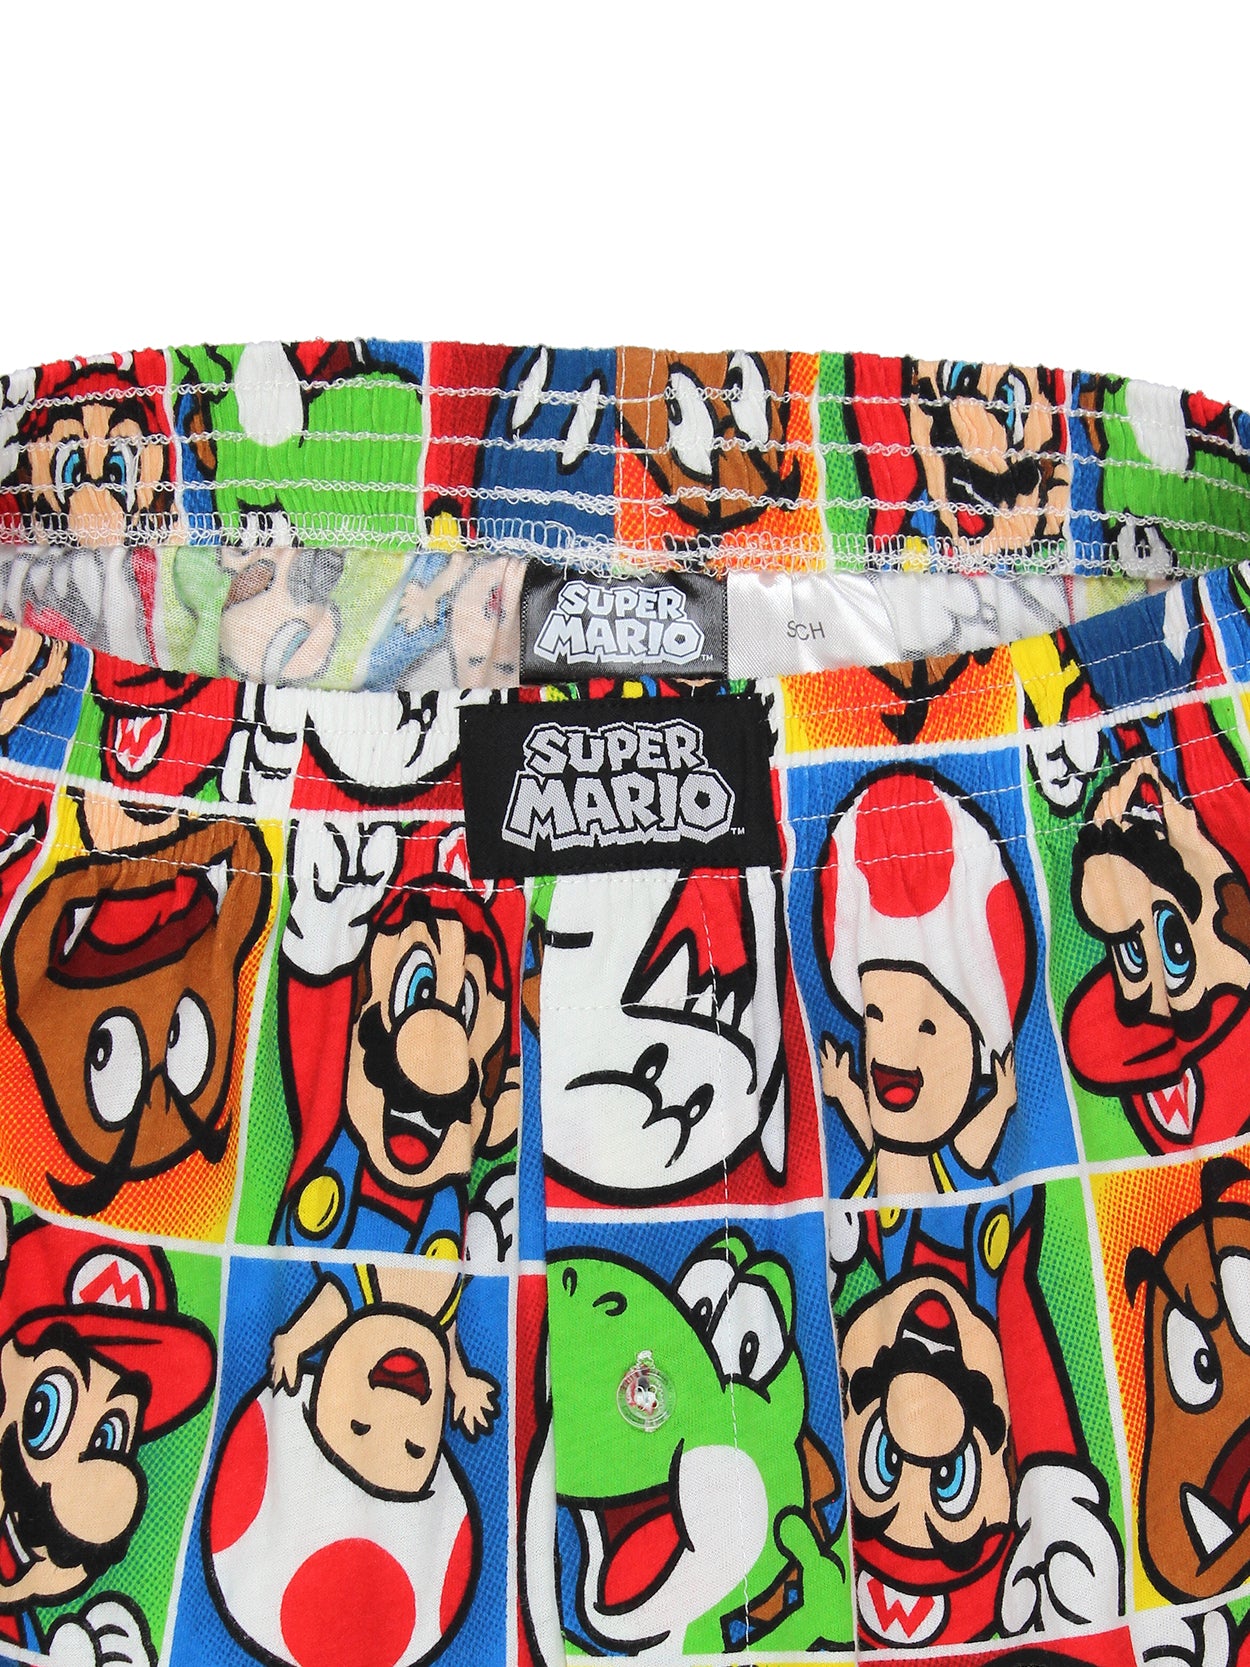 Super Mario Brothers Luigi Comic Style Button Fly Boxer Shorts